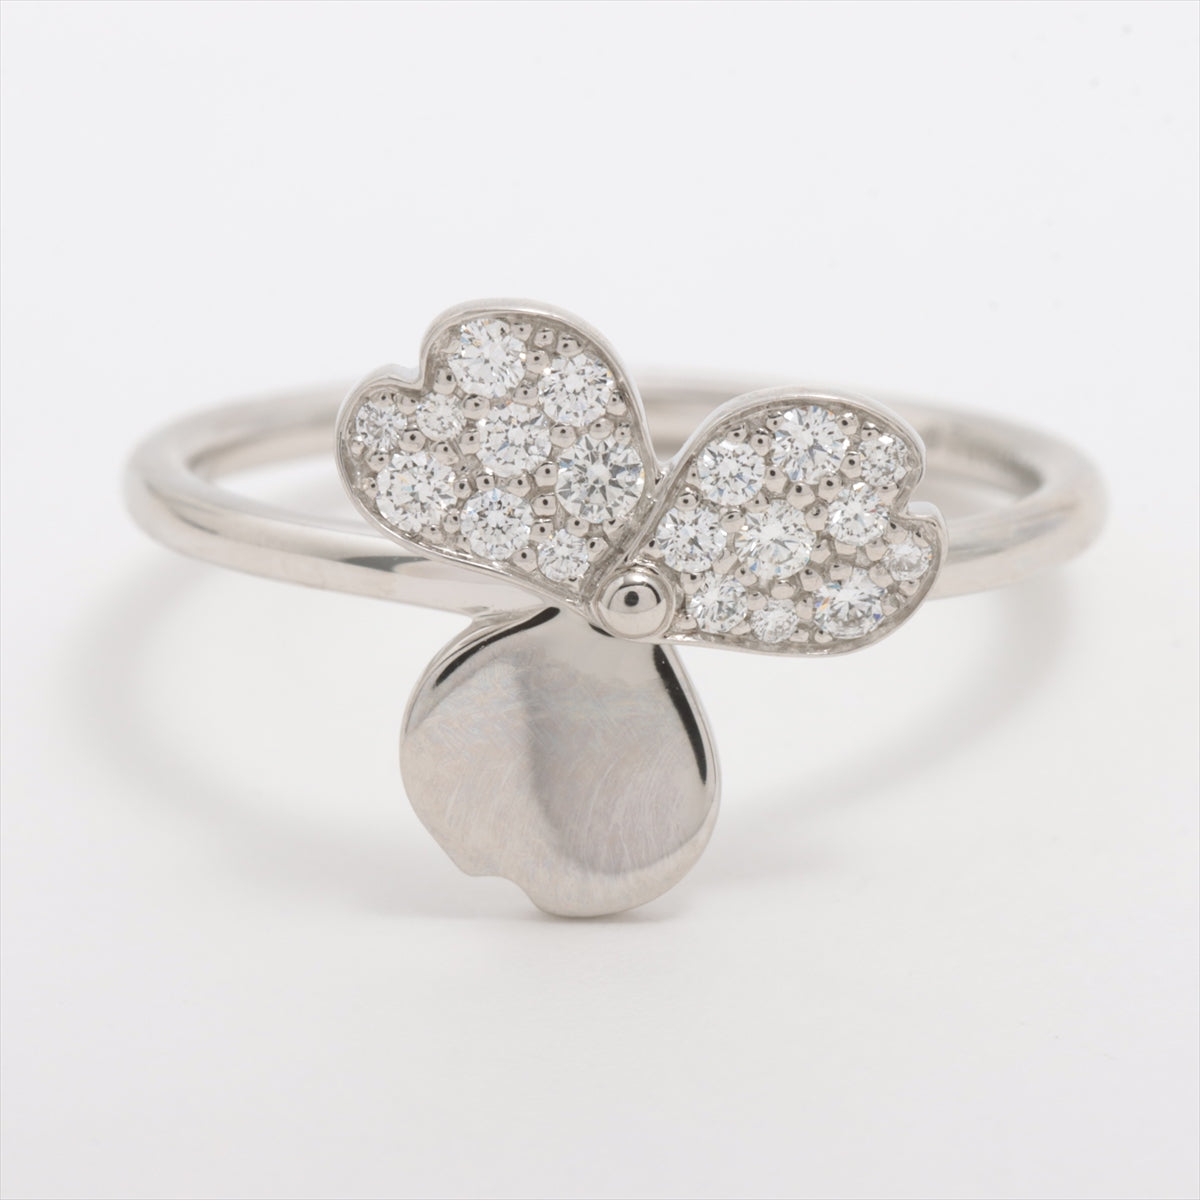 Tiffany Paper flowers diamond rings Pt950 3.9g